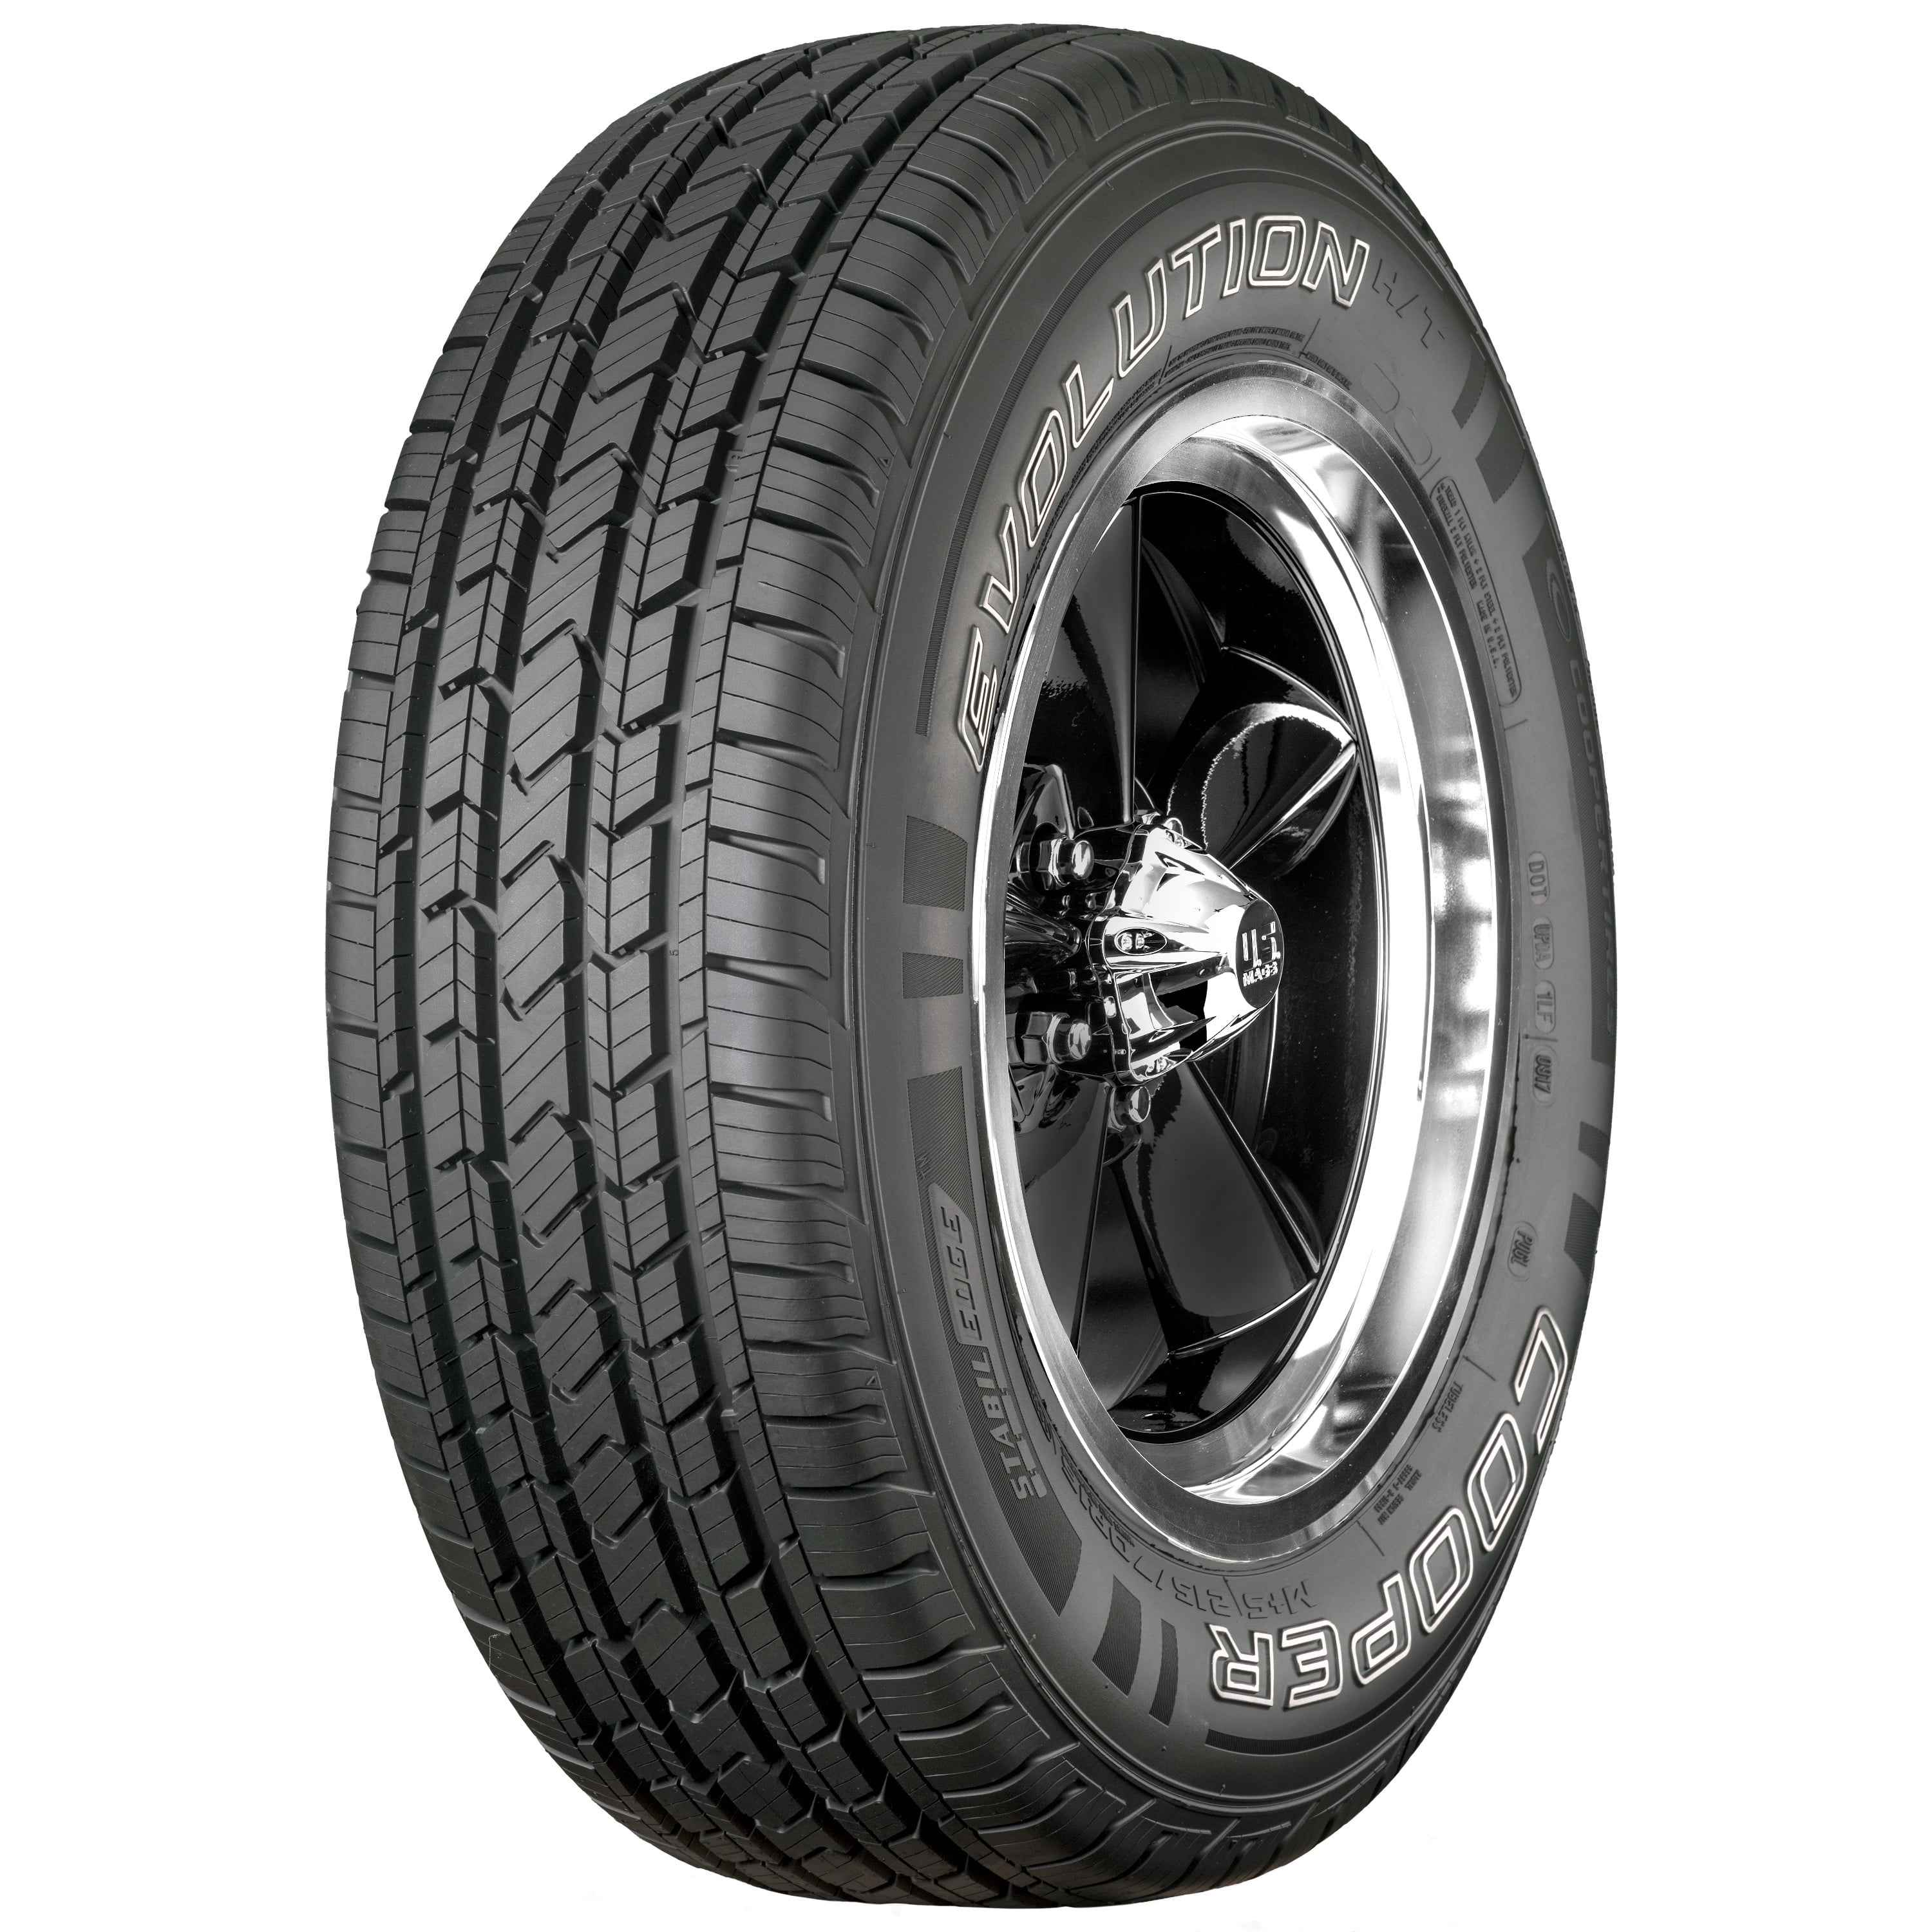 2 New 265/70R15 Federal Couragia XUV All-Season Tires 265 70 15 R15 2657015 70R